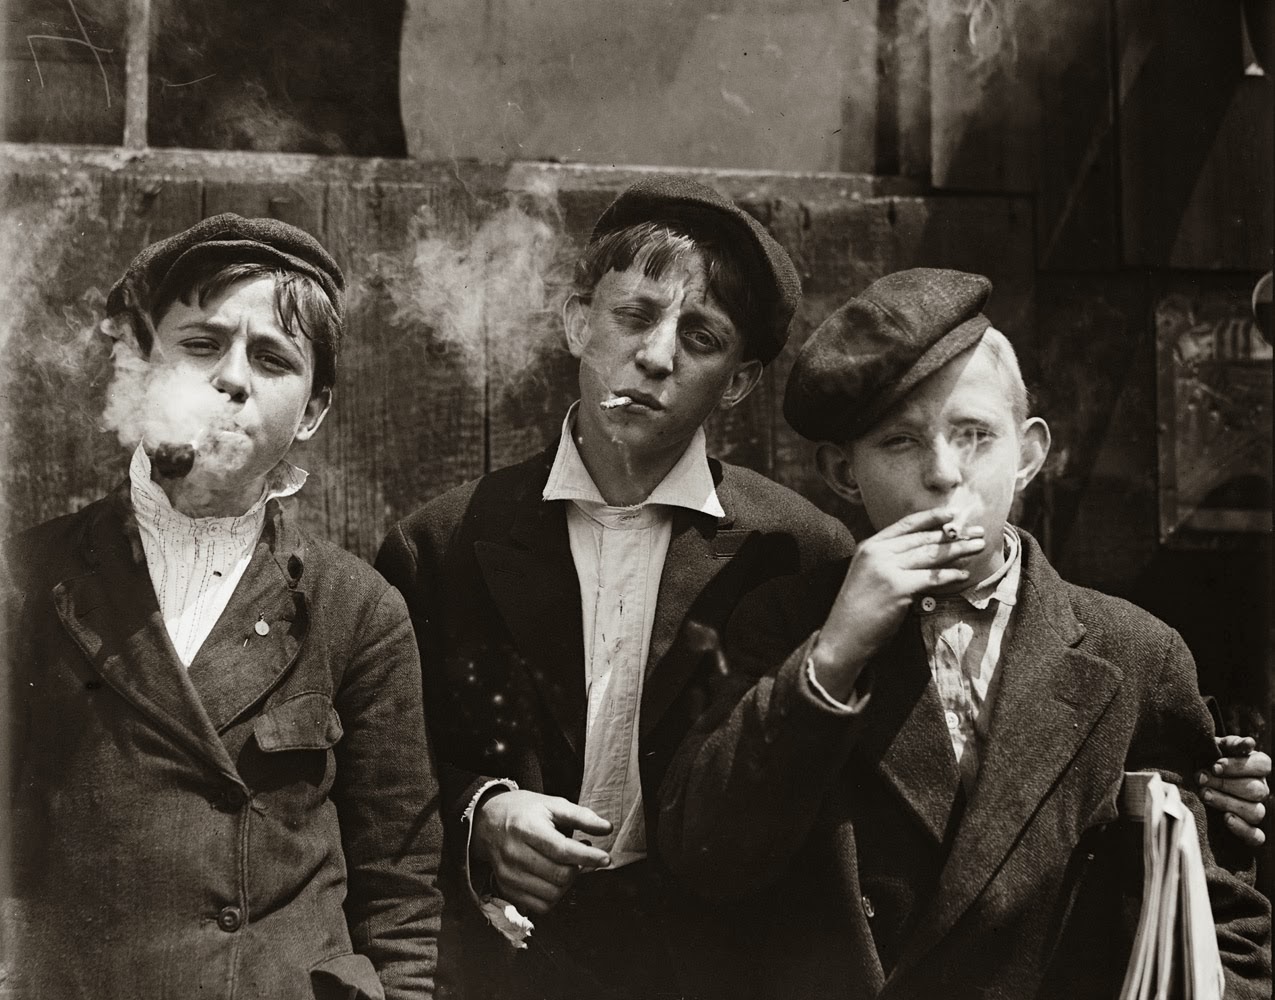 Child laborers, newsboys smoking cigarettes, 1910 - Rare ...